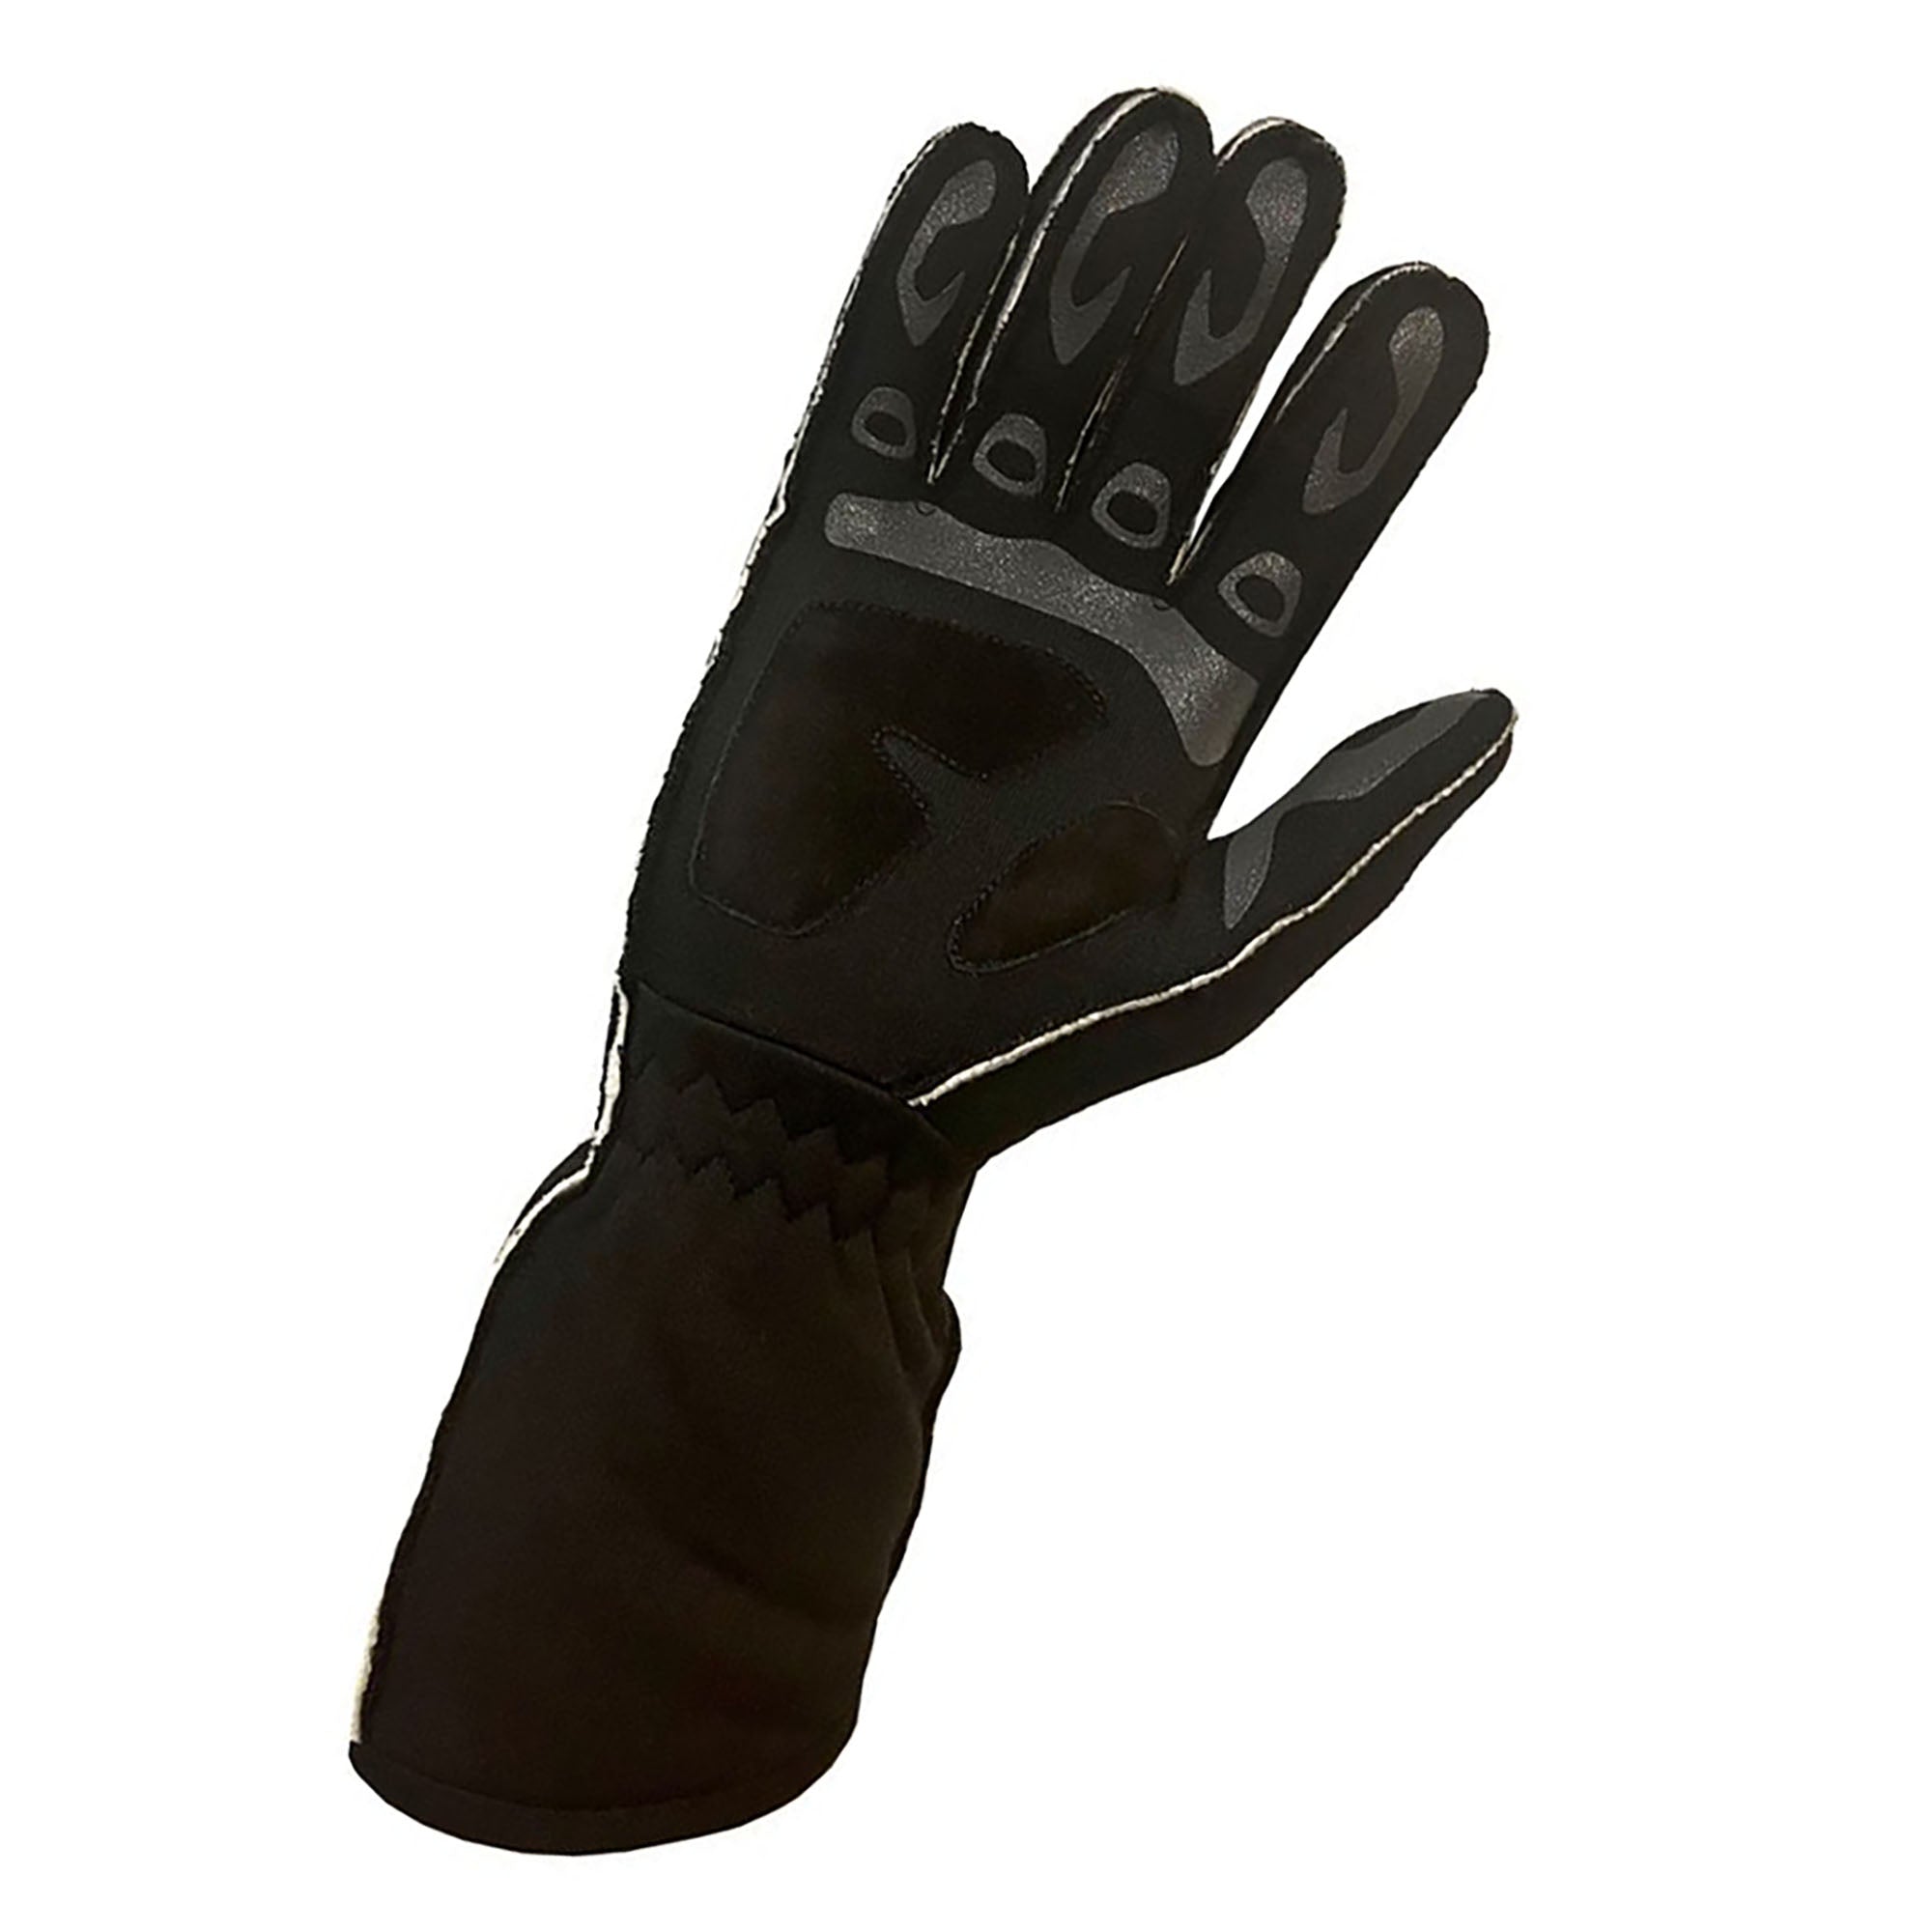 Bell Pro-TX Racing Gloves